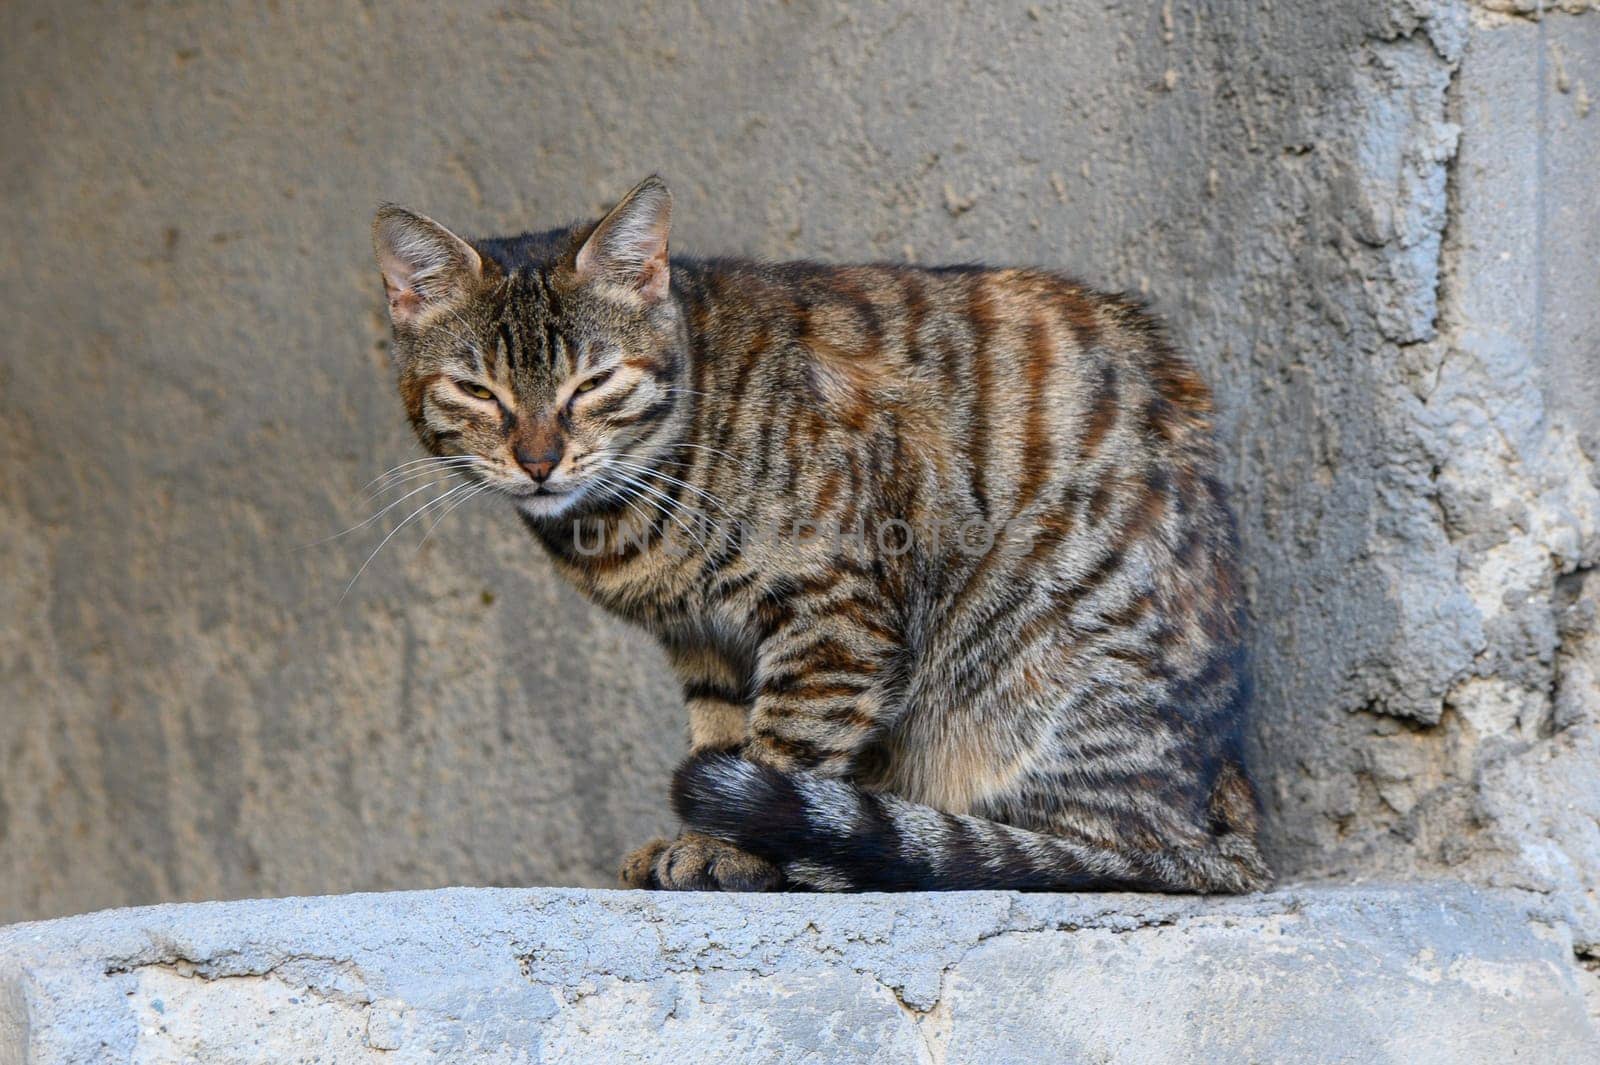 homeless sleepy cat cute mammal portrait sitting pose near grunge textured slum back street wall outdoor3